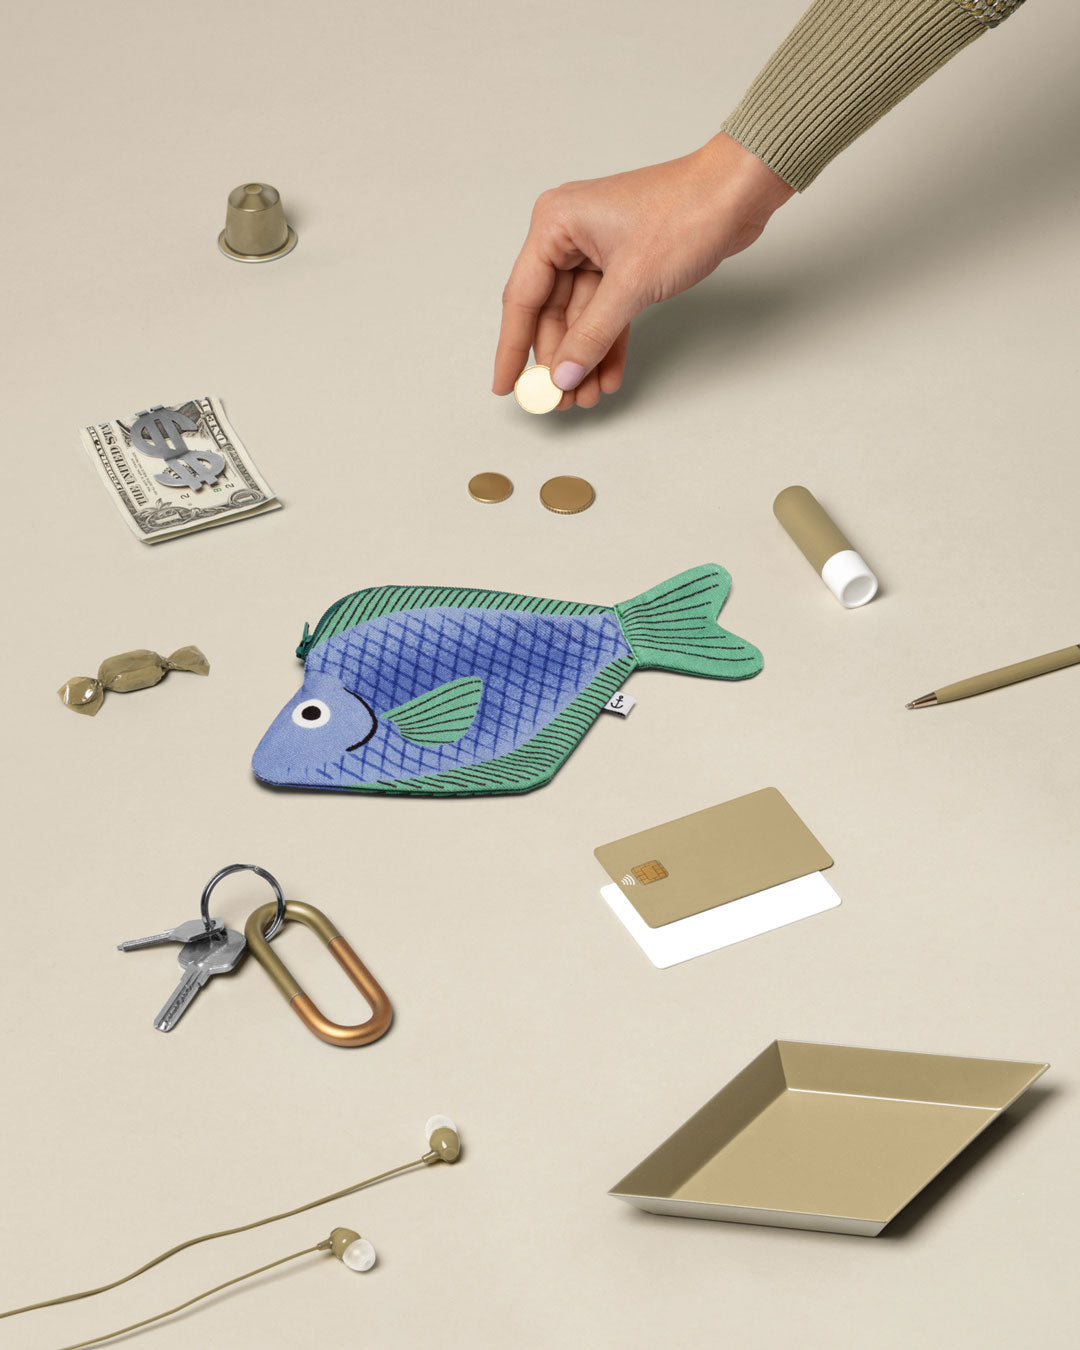 Seabream handmade handcrafted bac purse case textile fun fish ocean